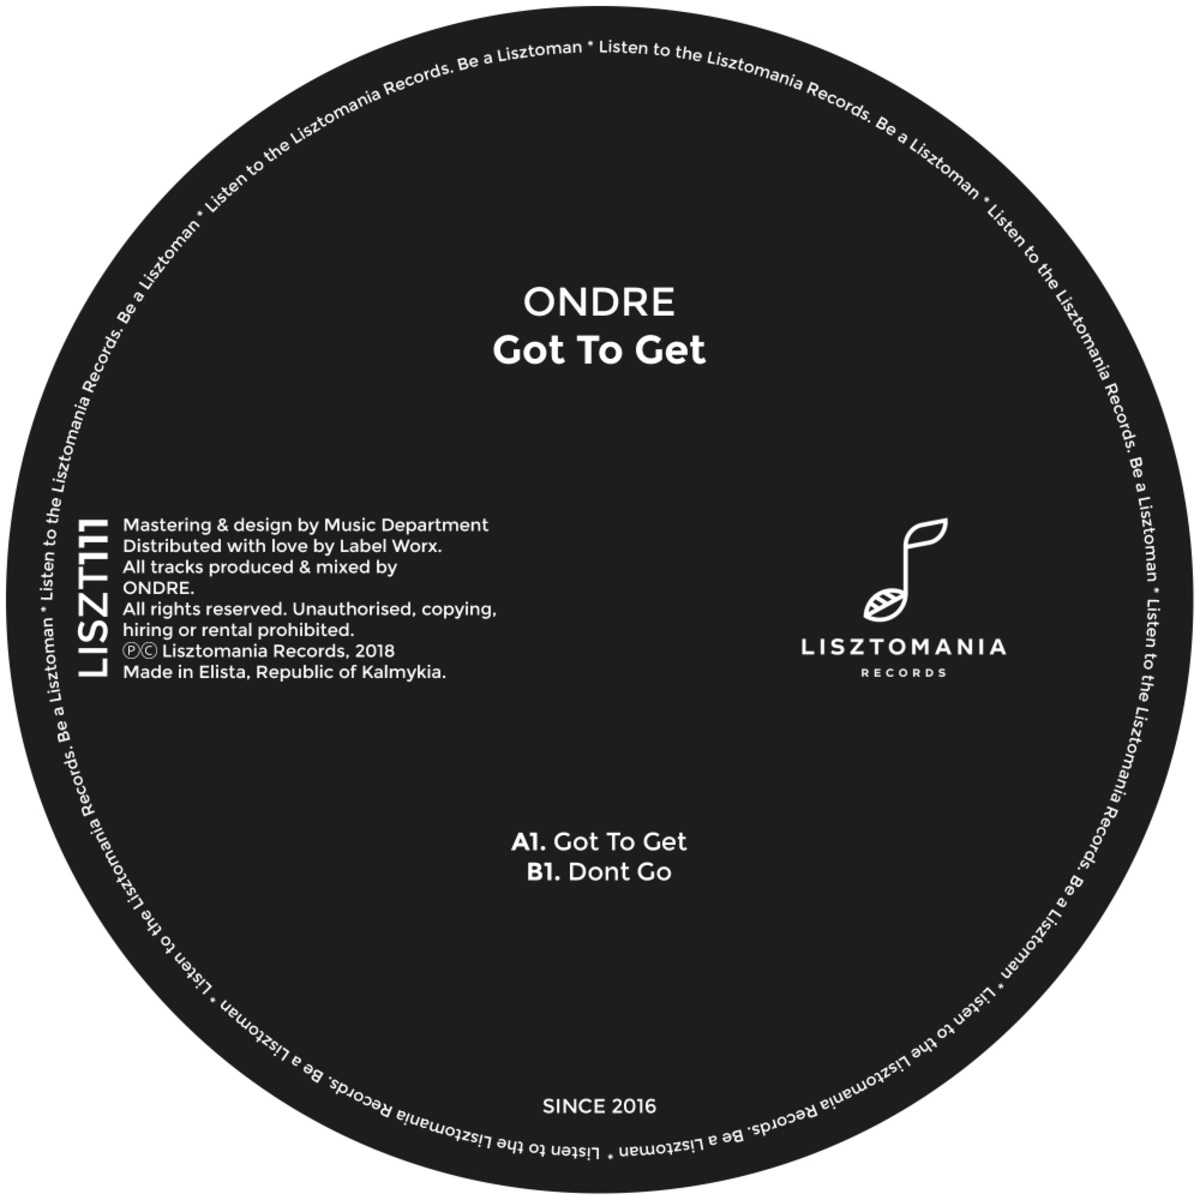 Ondre - Got To Get / Lisztomania Records